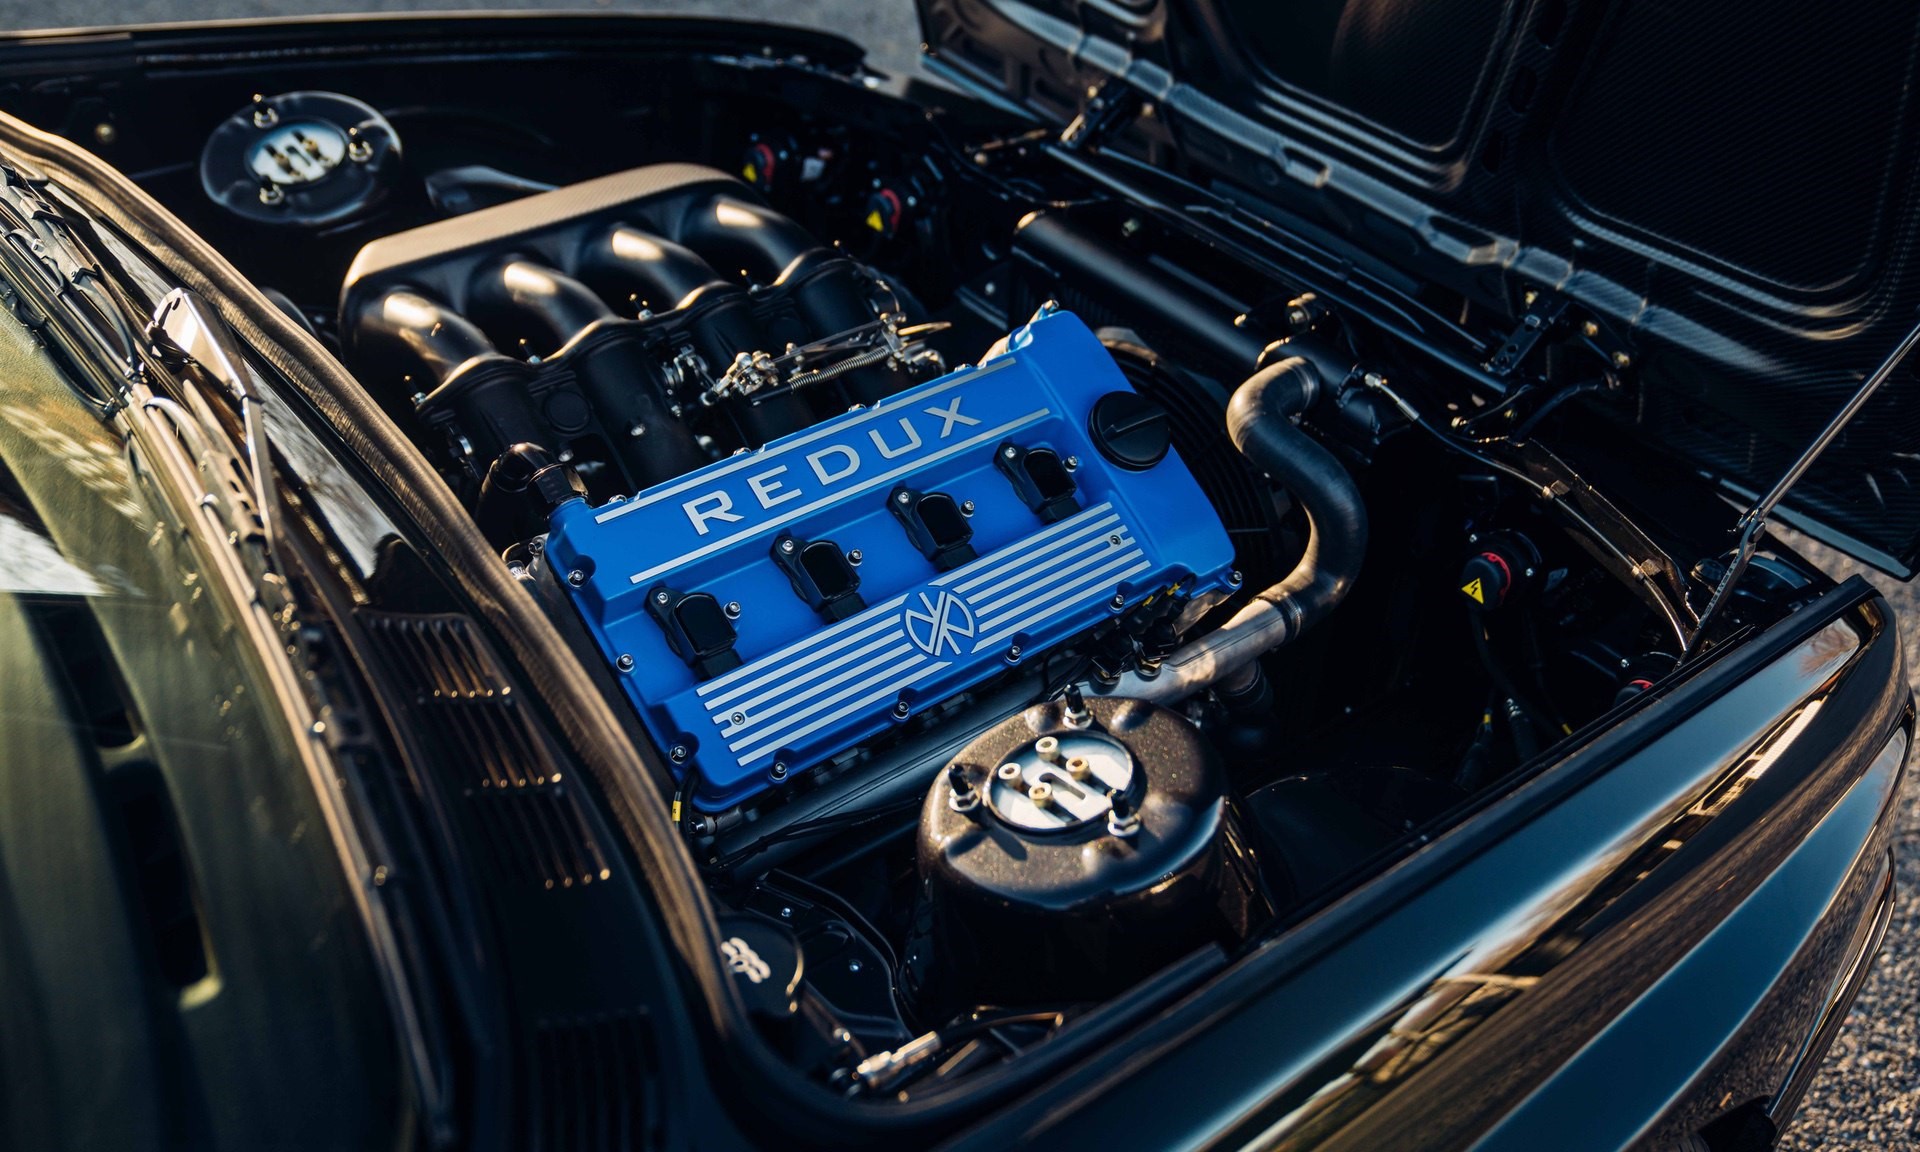 Redux BMW M3 engine